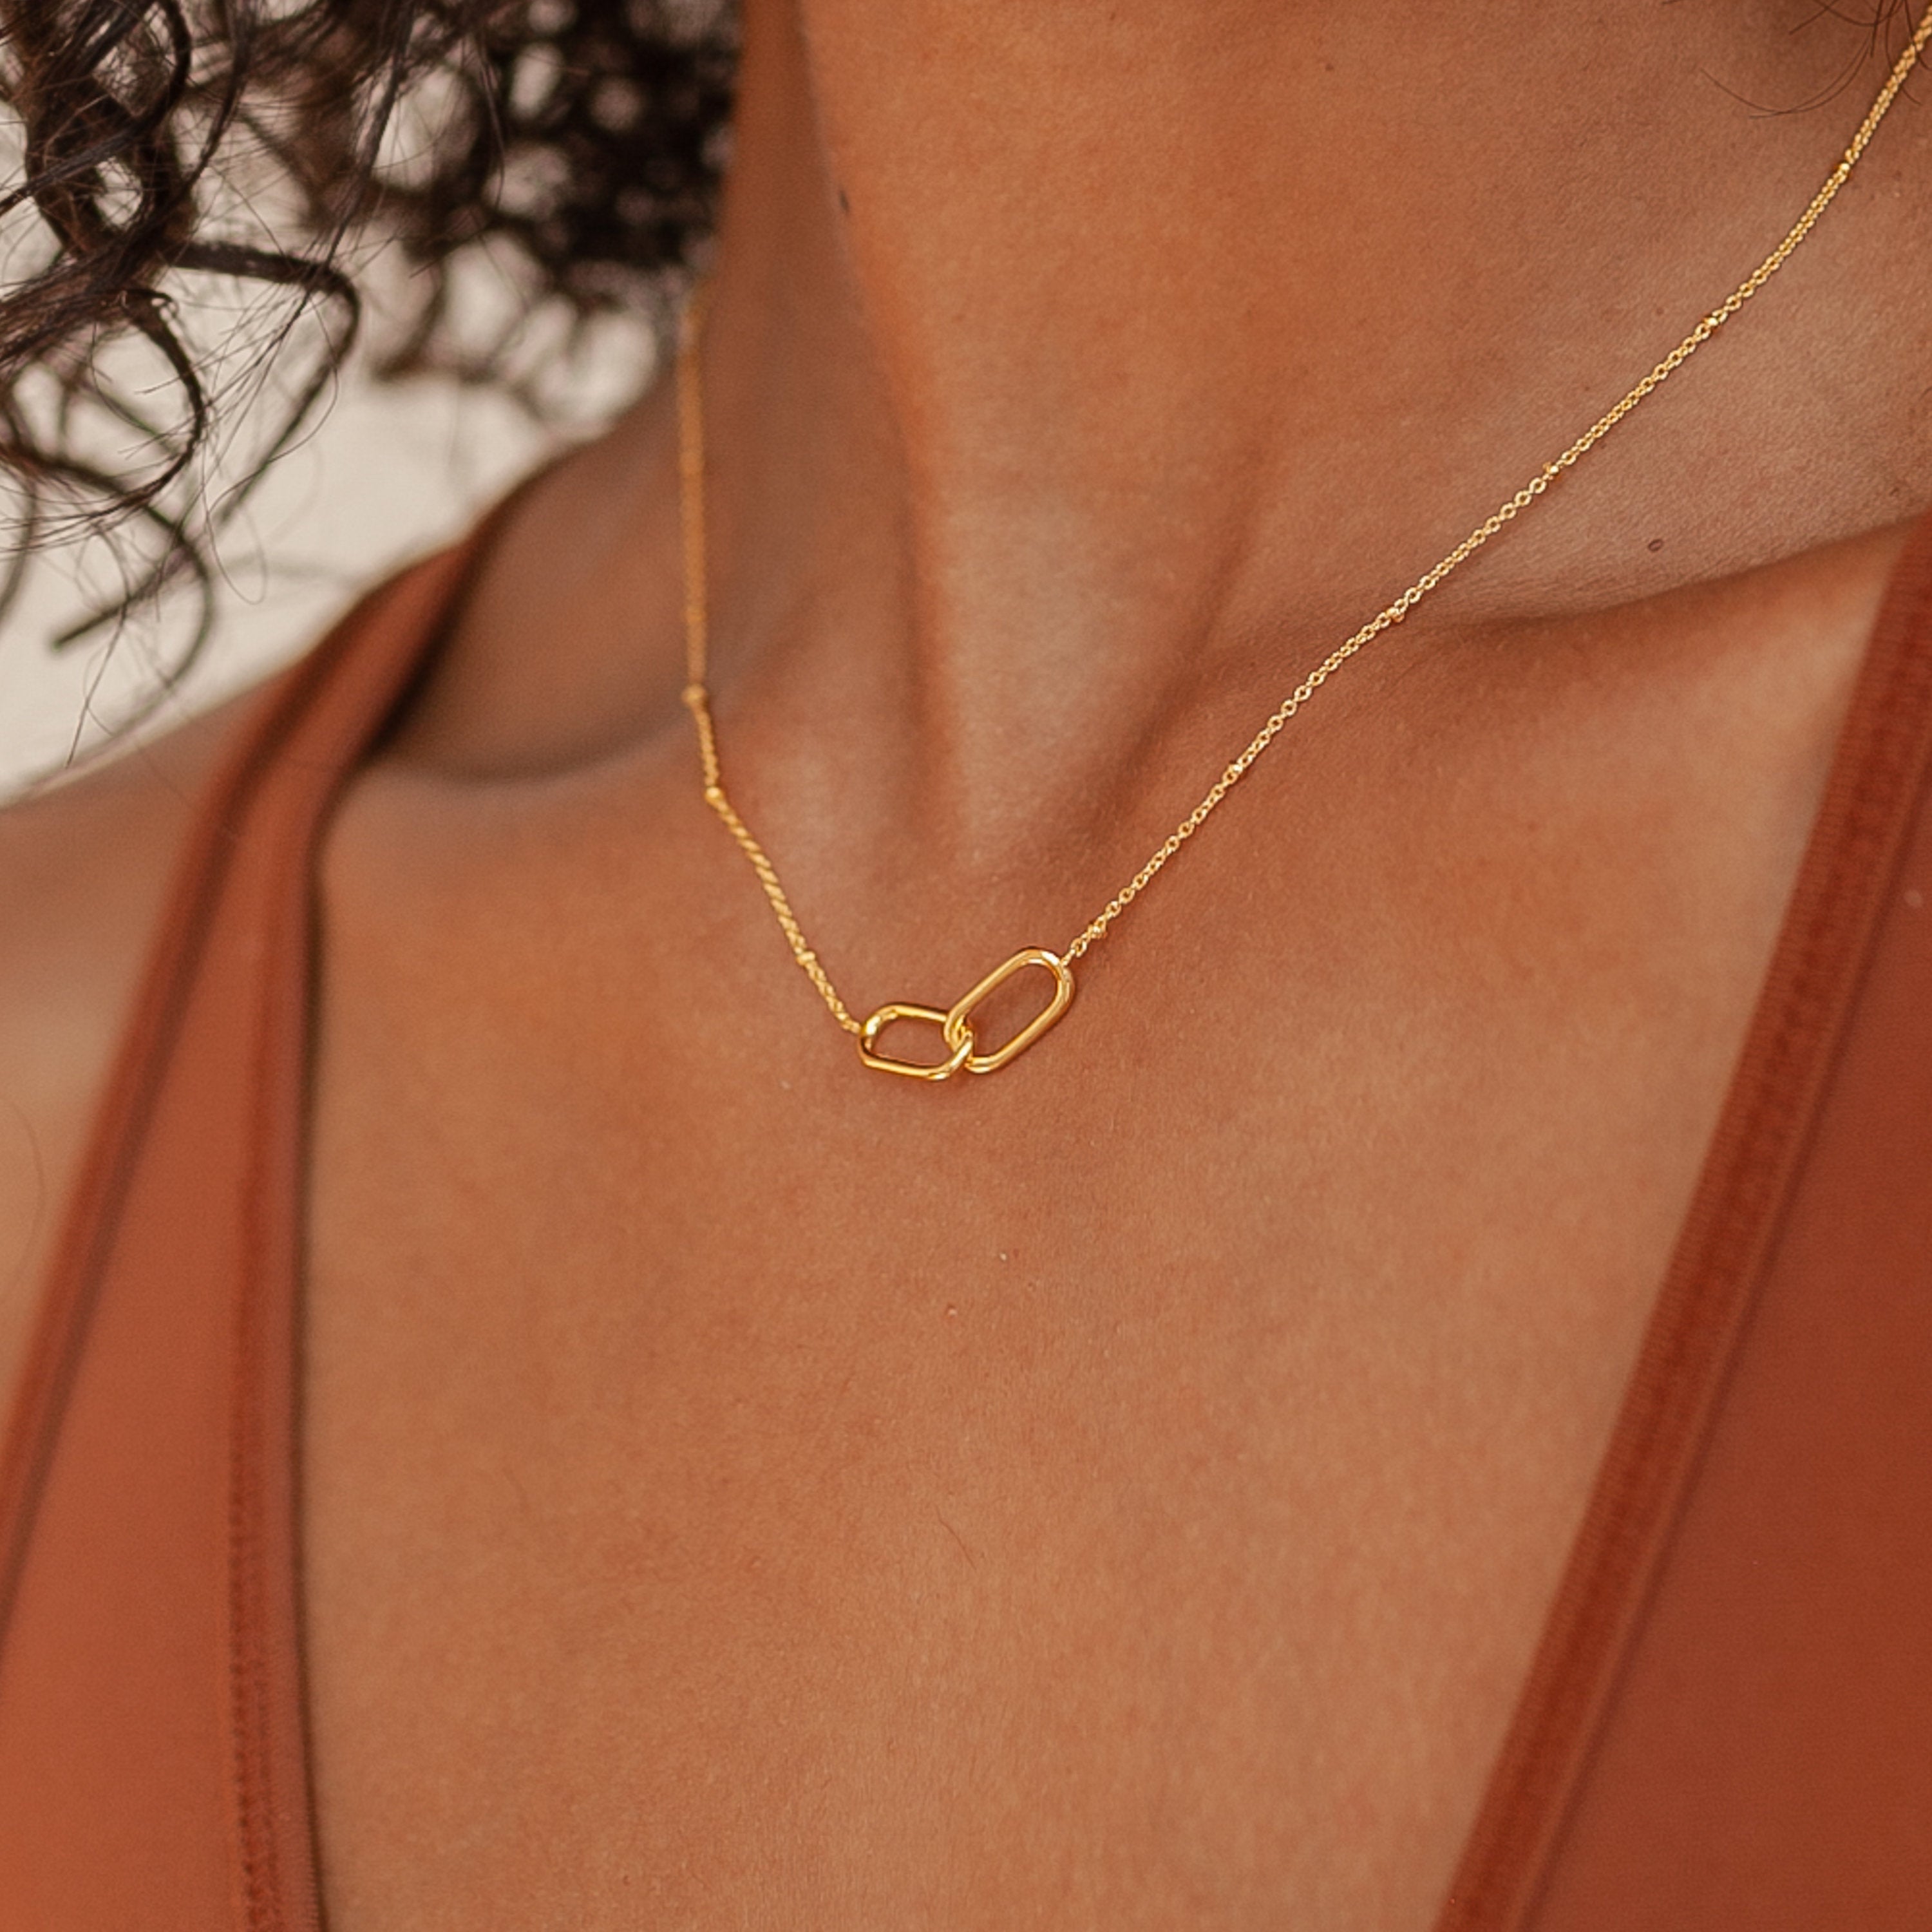 Linked Necklace & Earrings Set